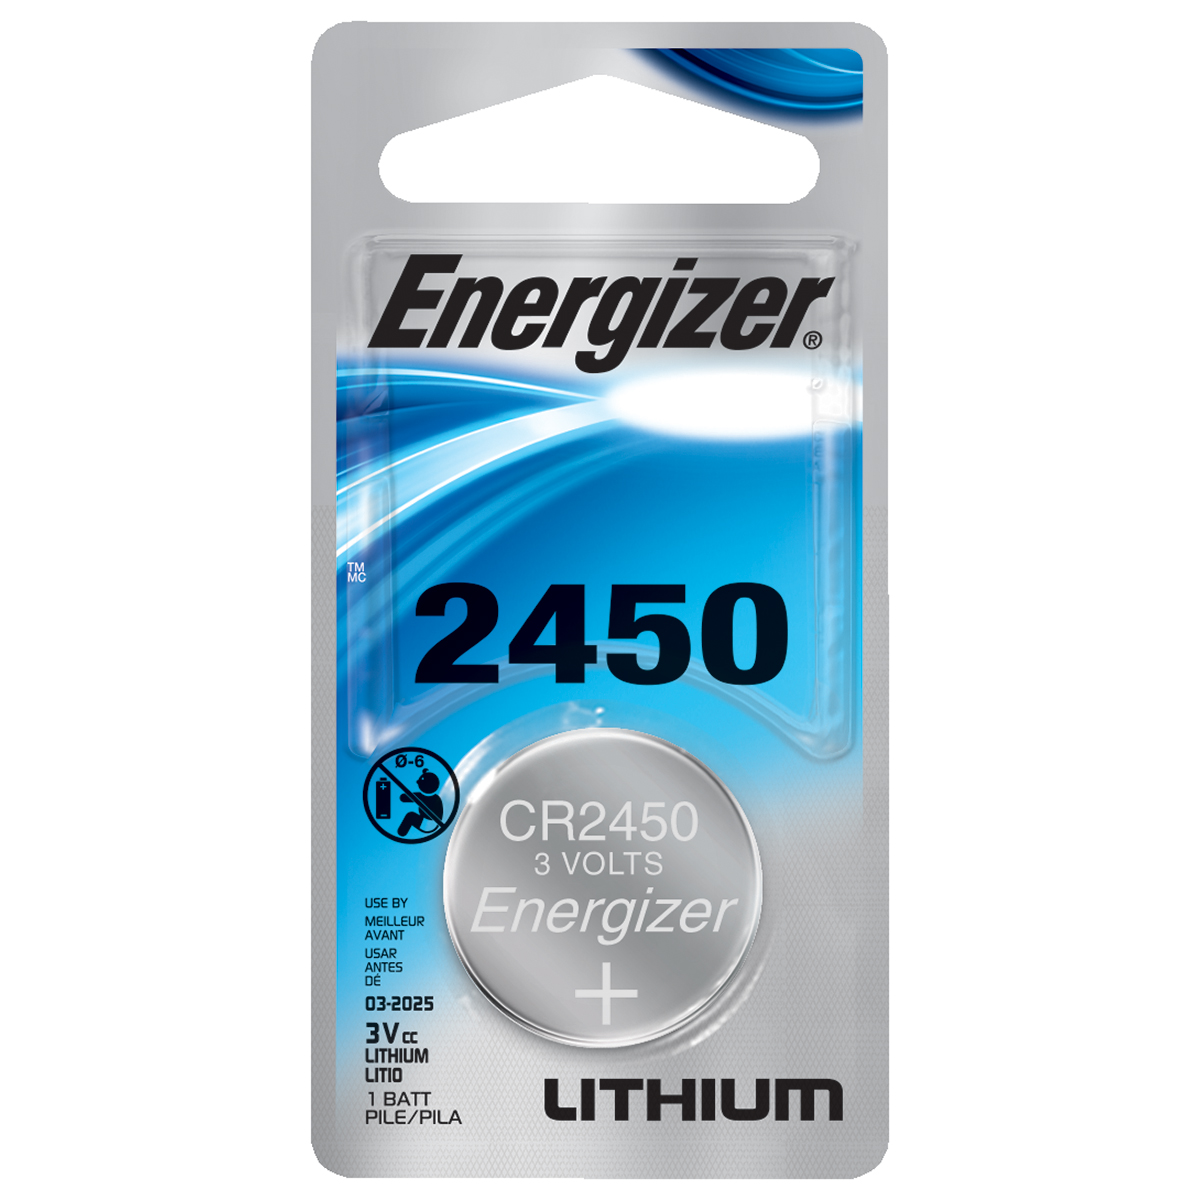 Energizer 2450